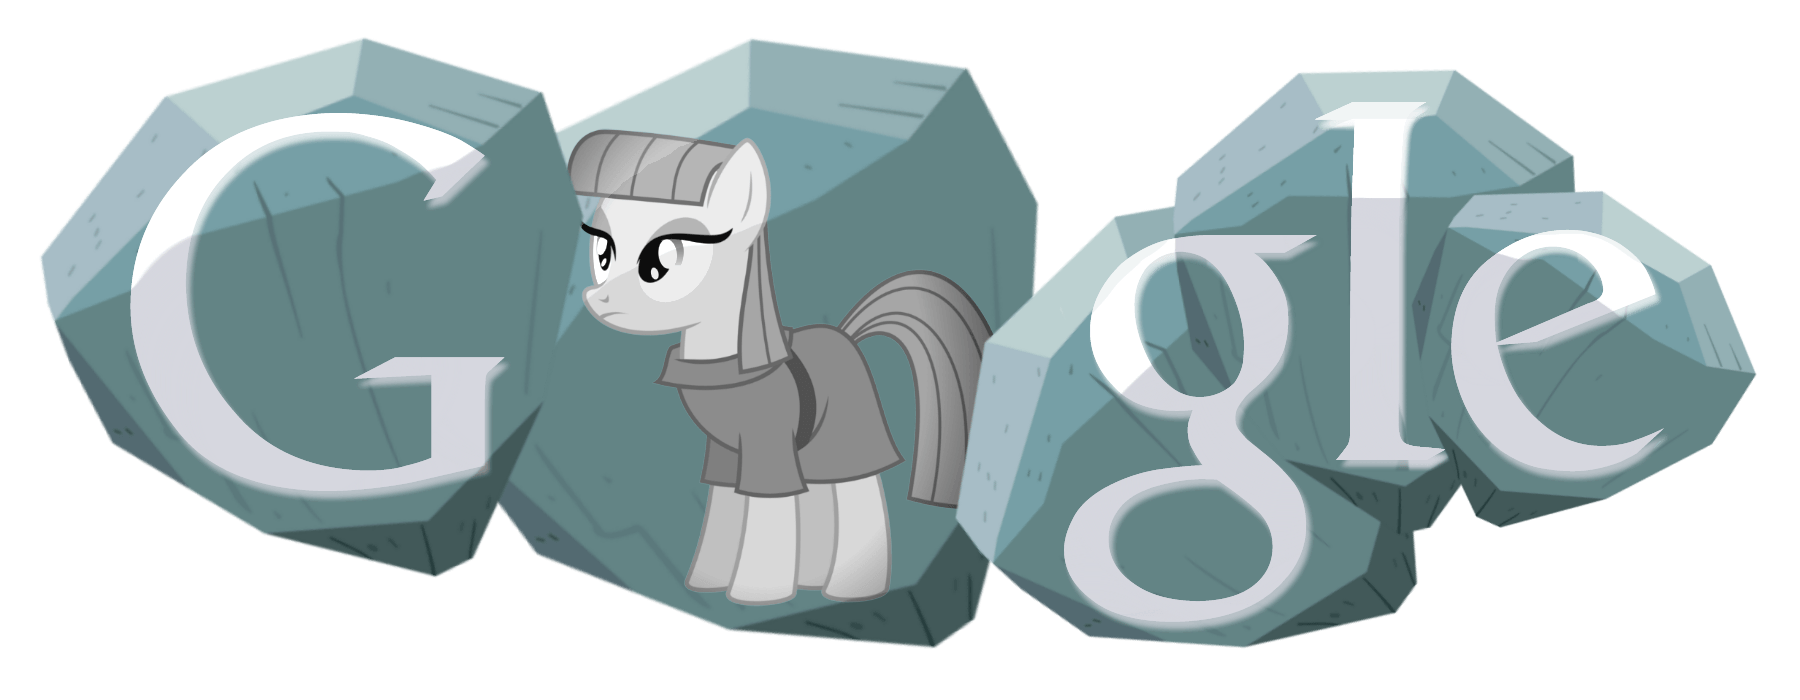 Best Google Logo - The Best Google Logo - My Little Pony (MLP) Logo | Userstyles.org ...